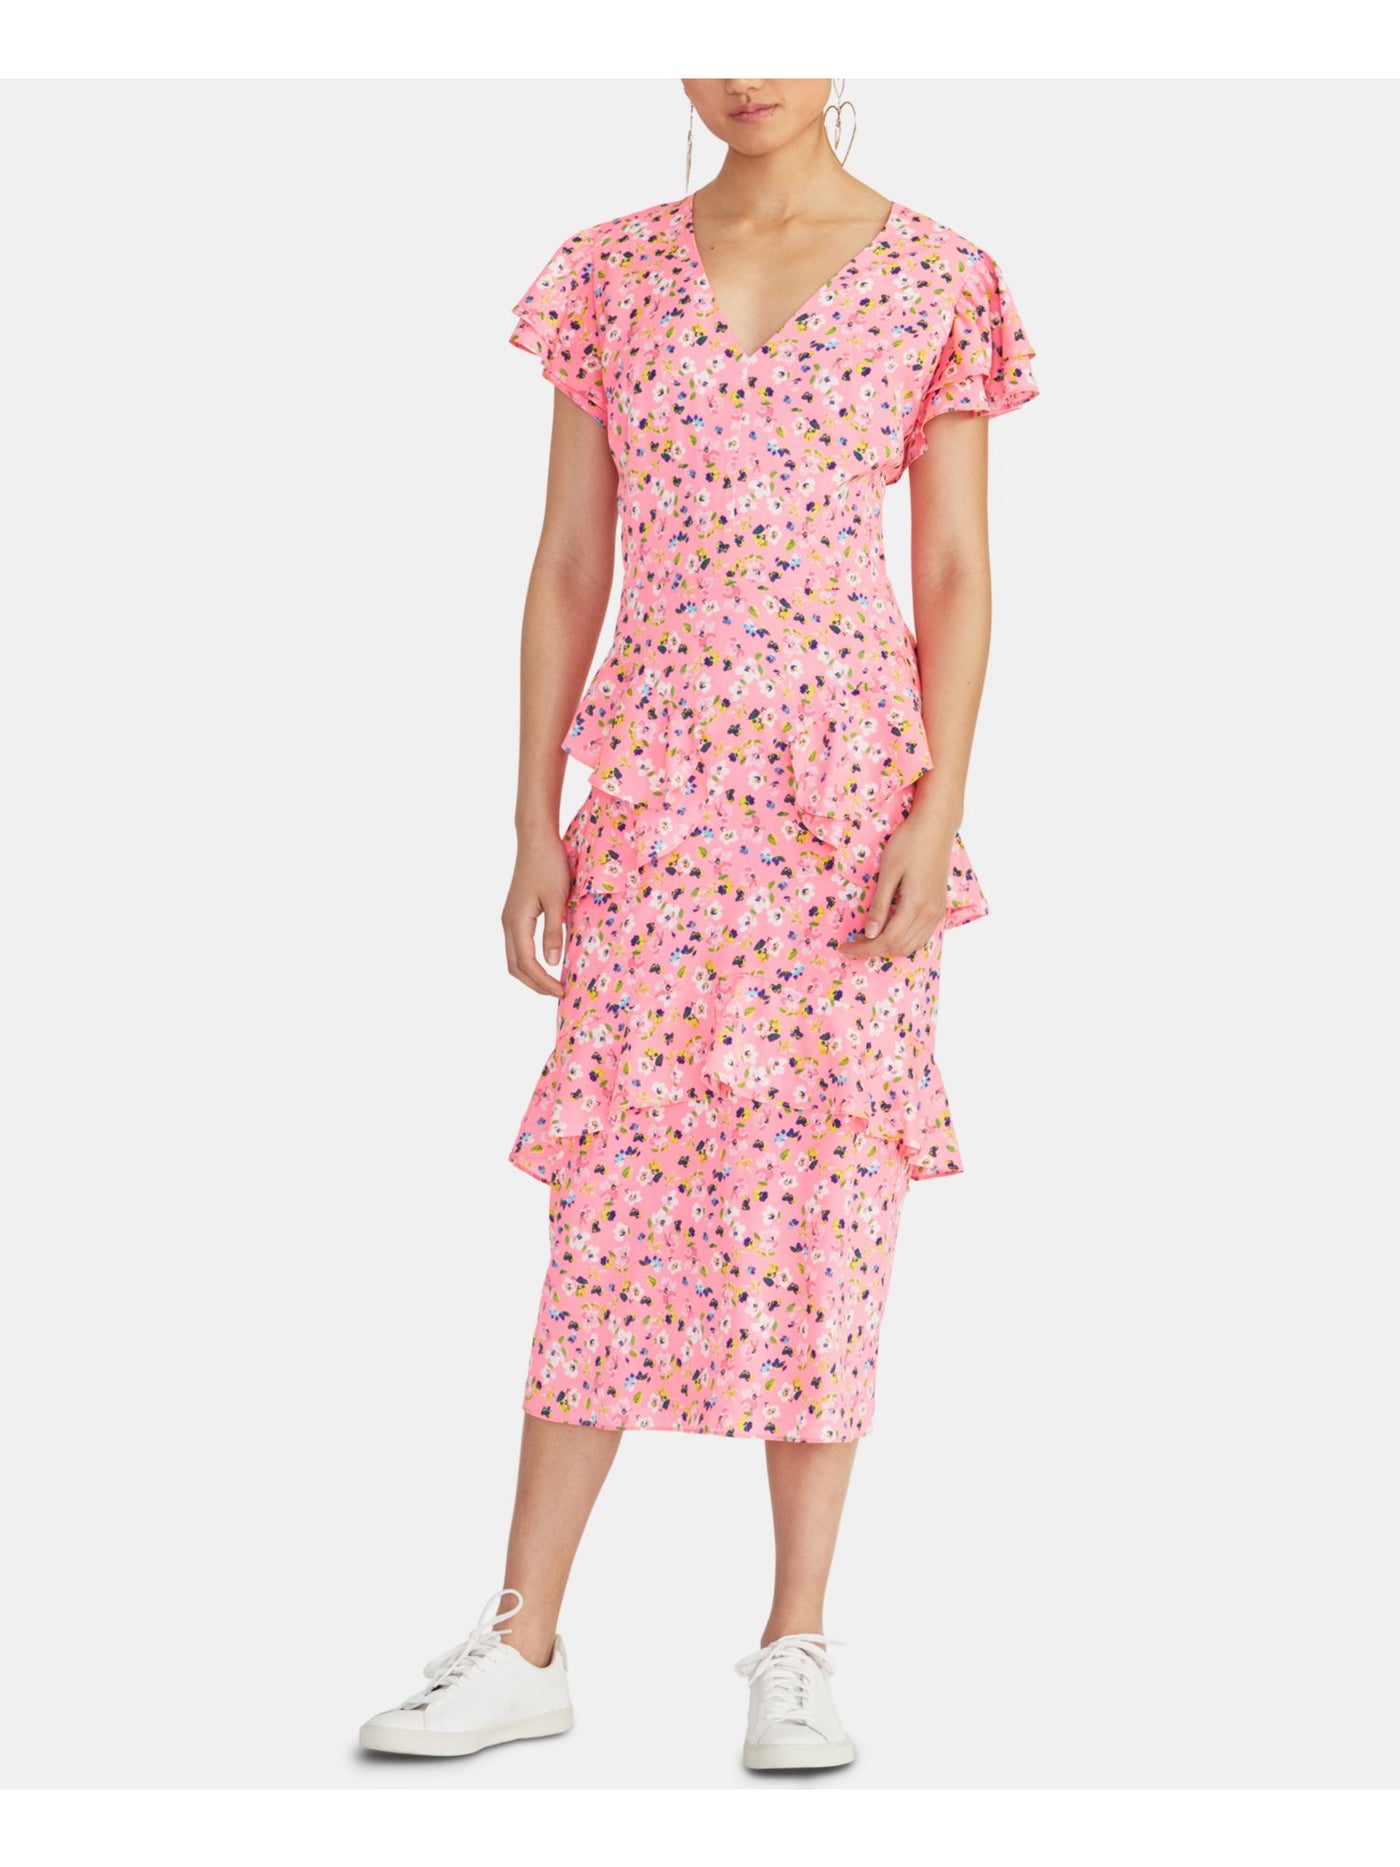 RACHEL ROY Womens Pink Ruffled Floral Short Sleeve V Neck Tea-Length Sheath Dress 2